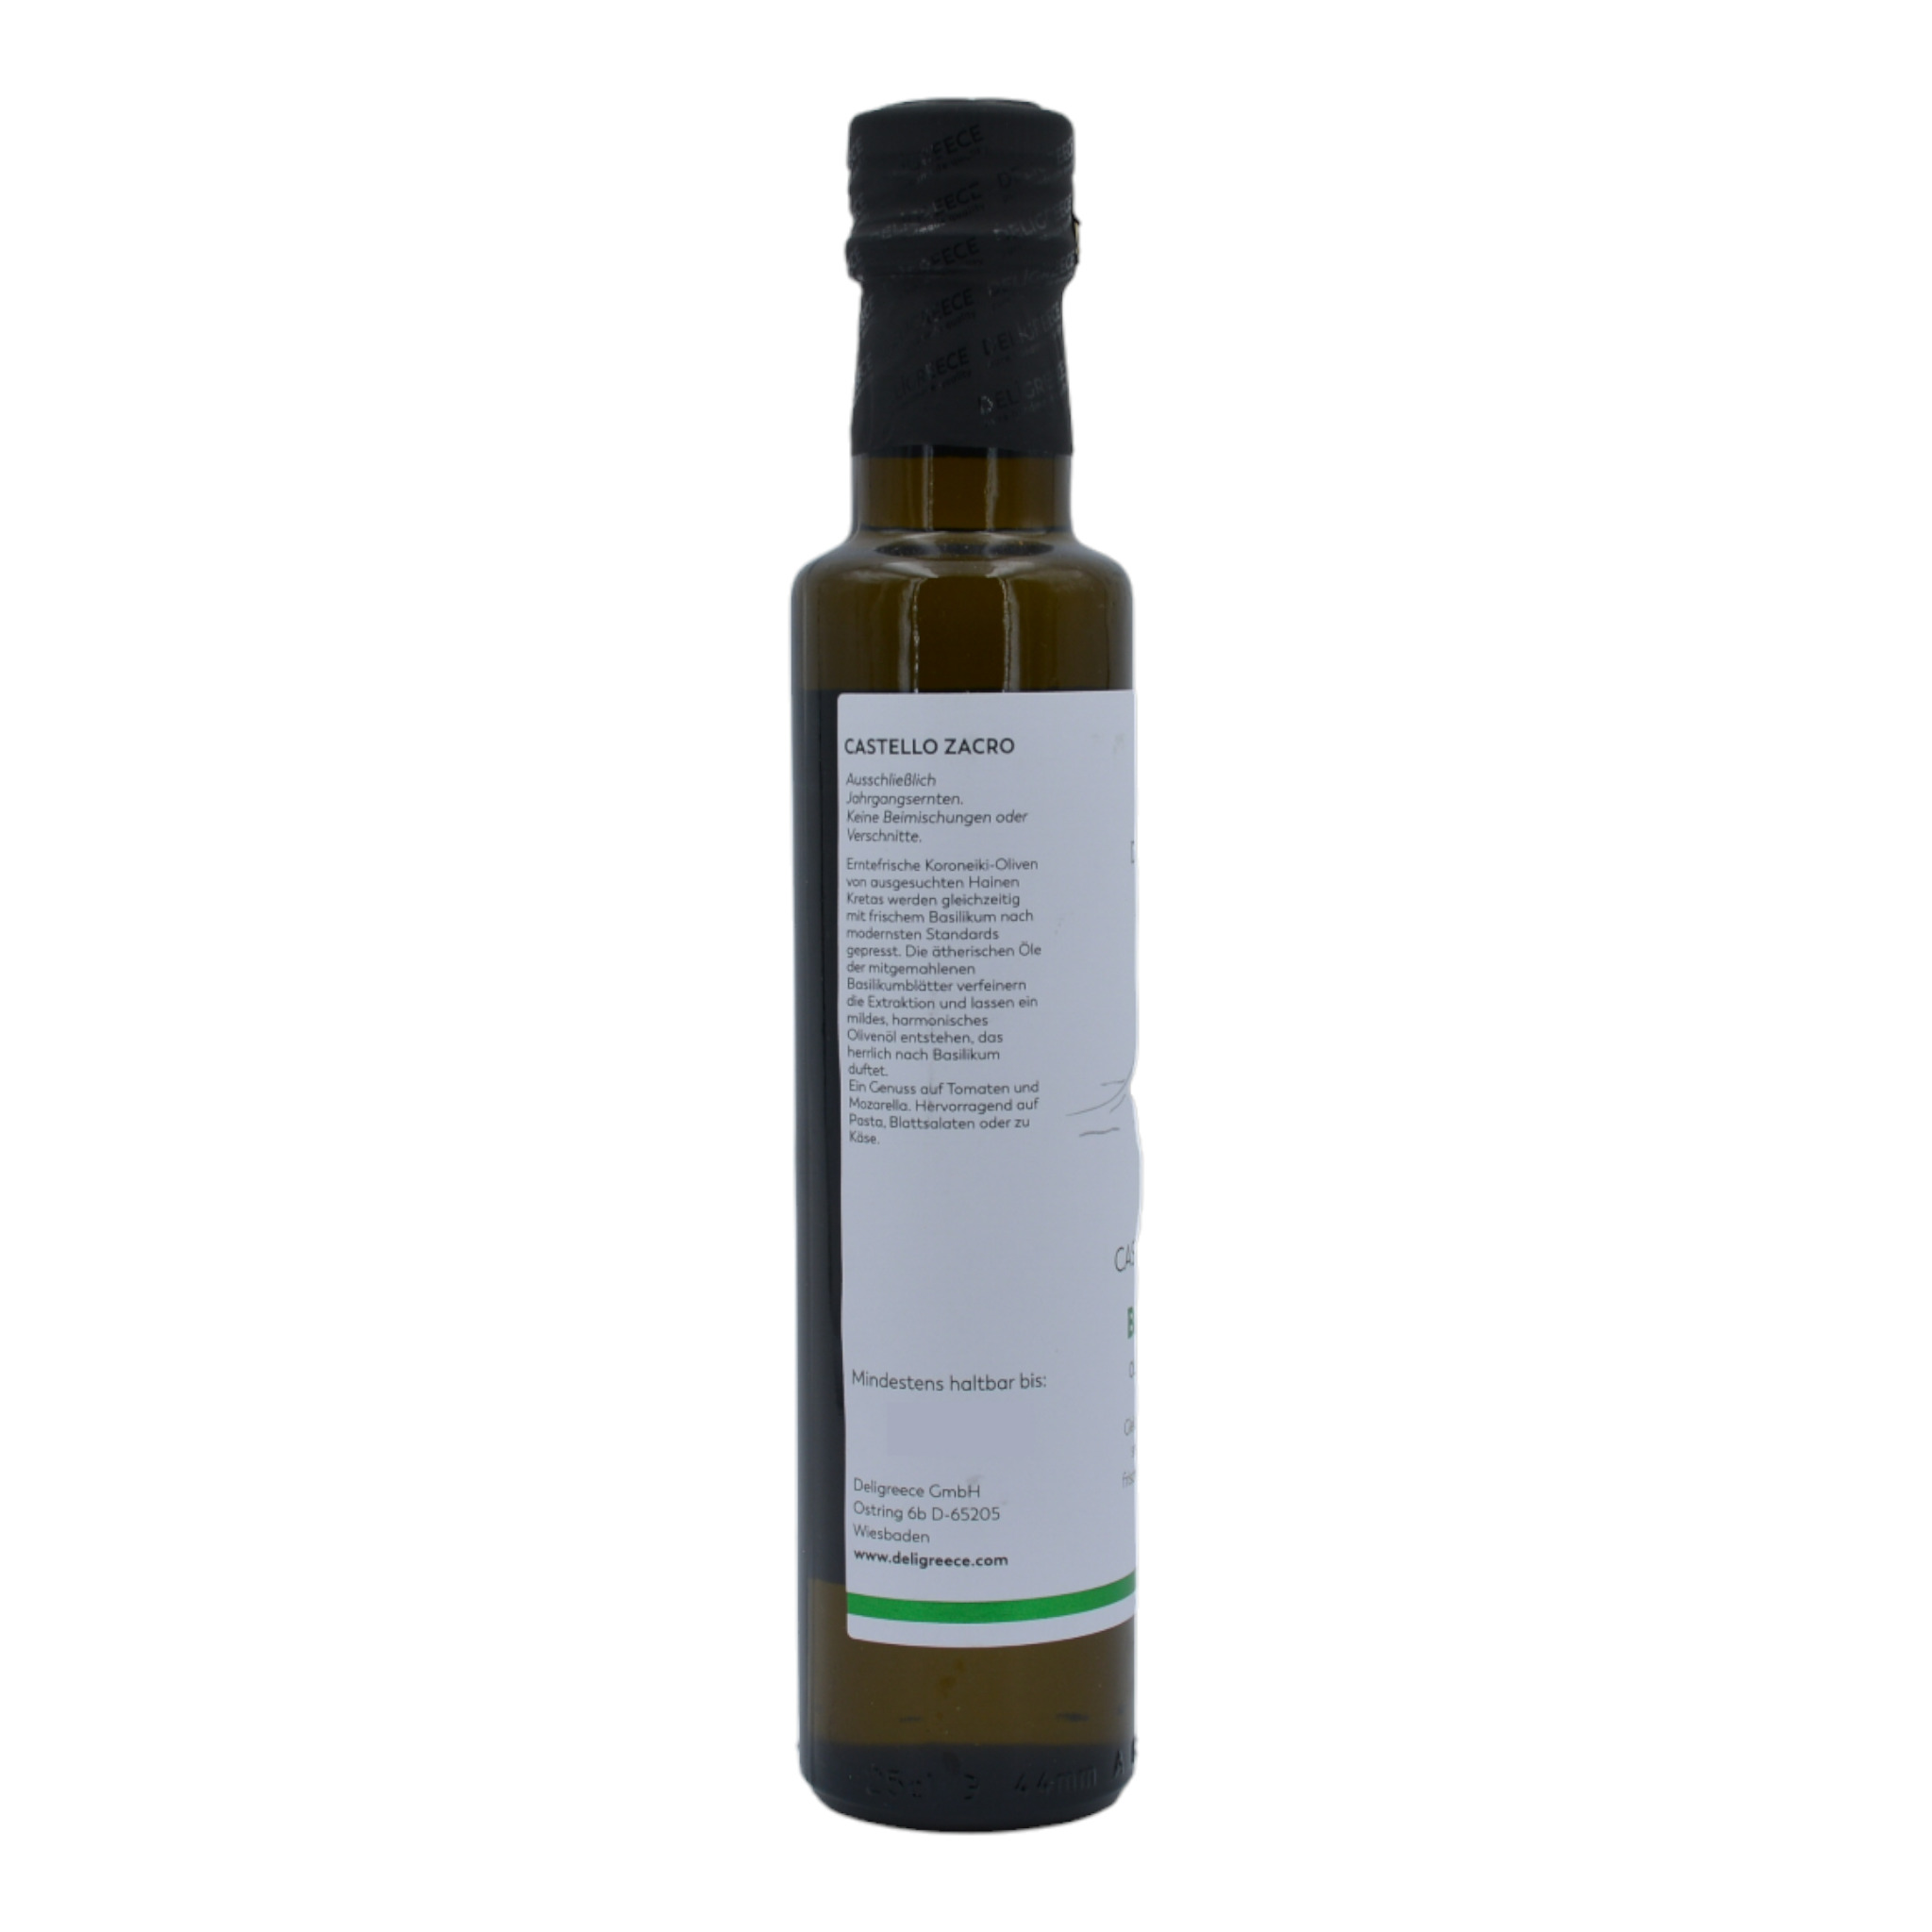 4260054323050Deligreece Castello Zacro Basilikum Oliveöl aus Kreta s2